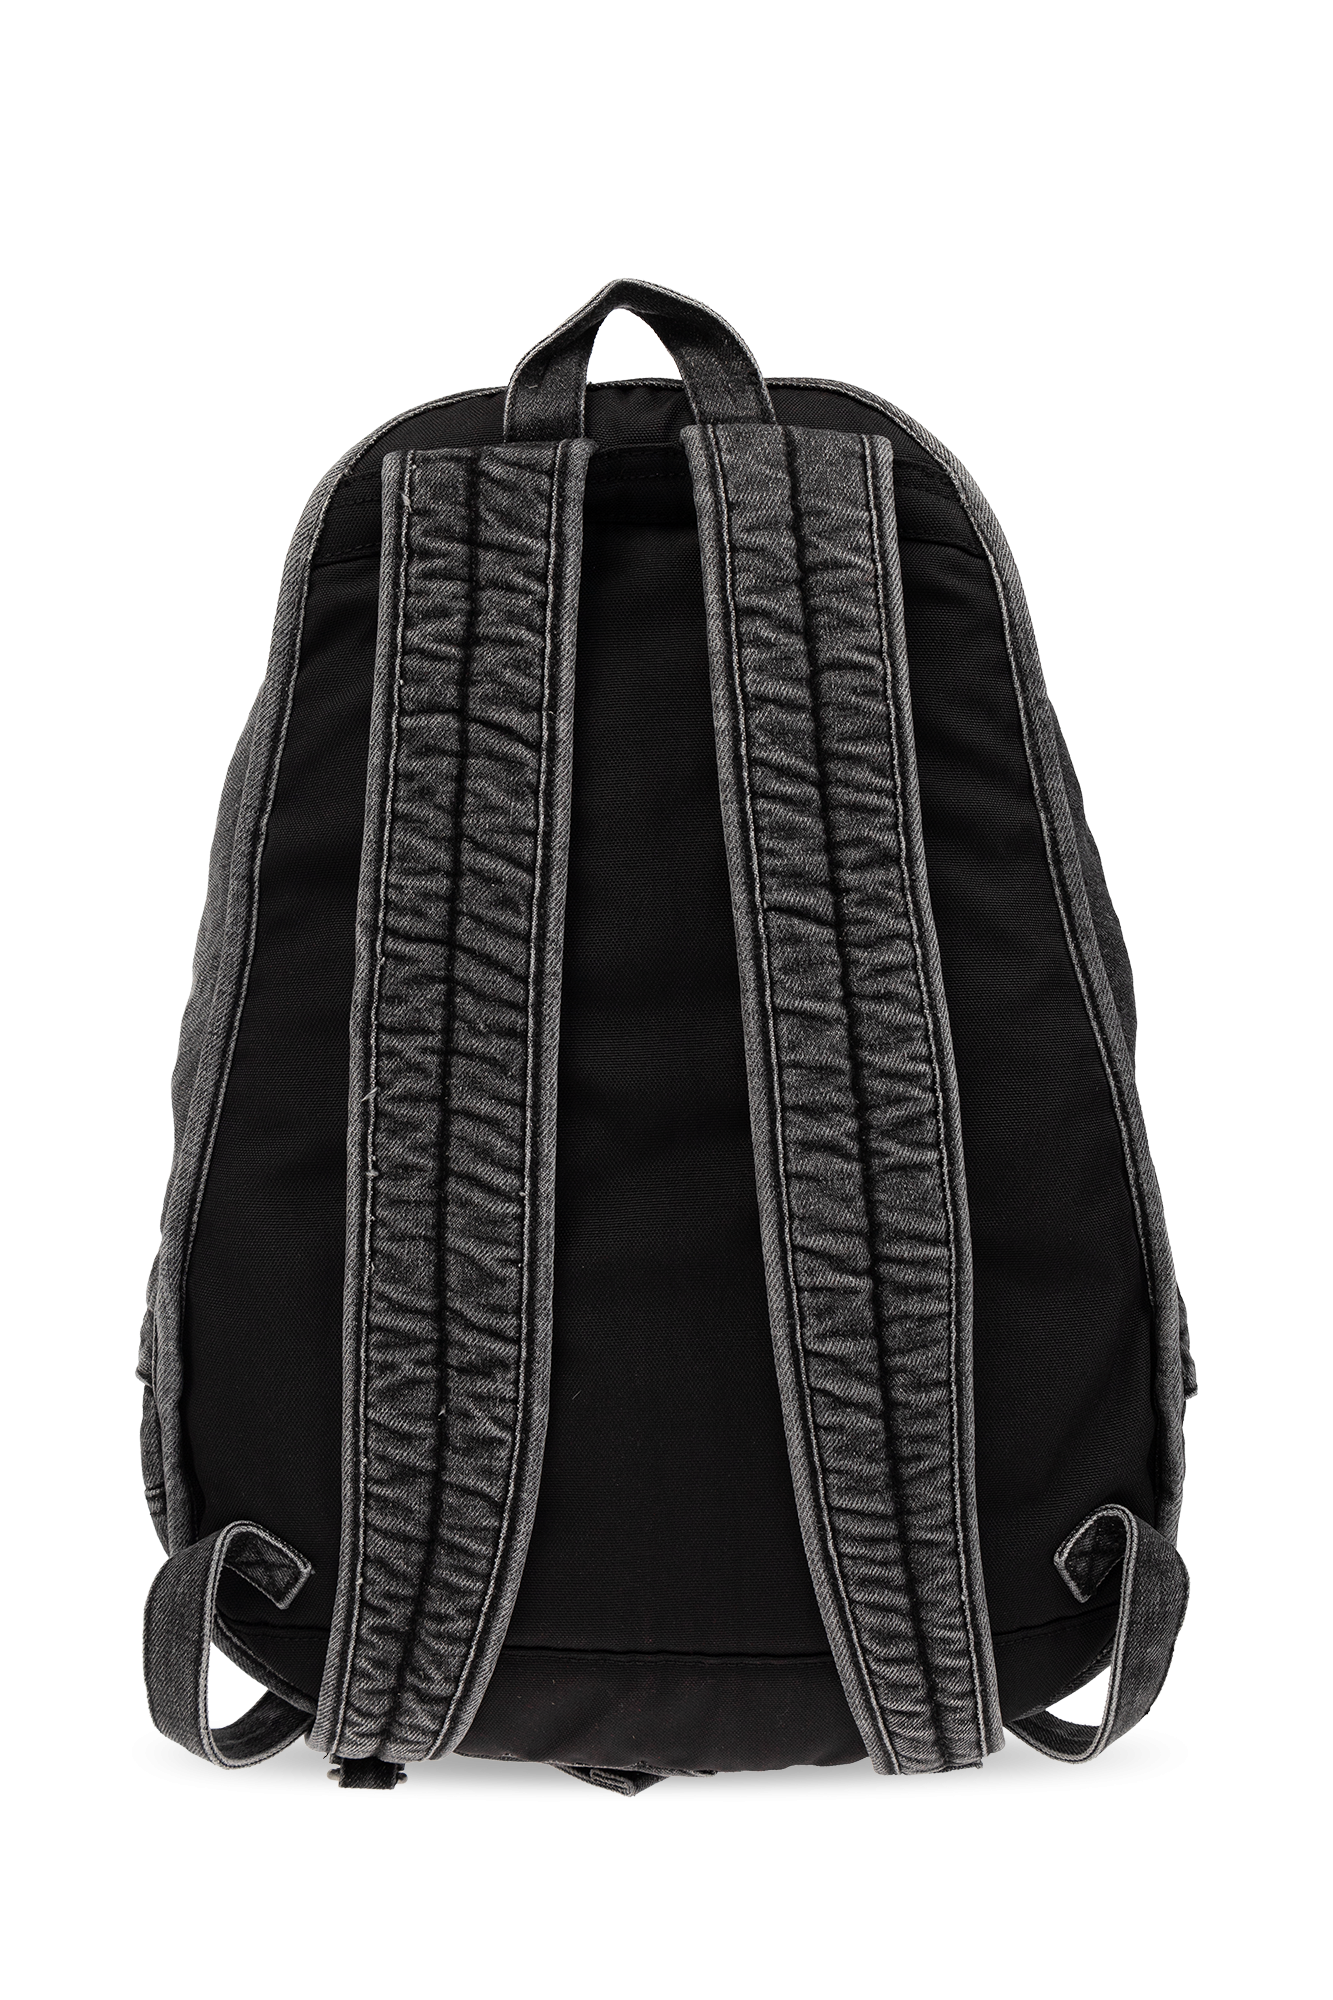 Diesel ‘RAVE RAVE’ snapshot backpack